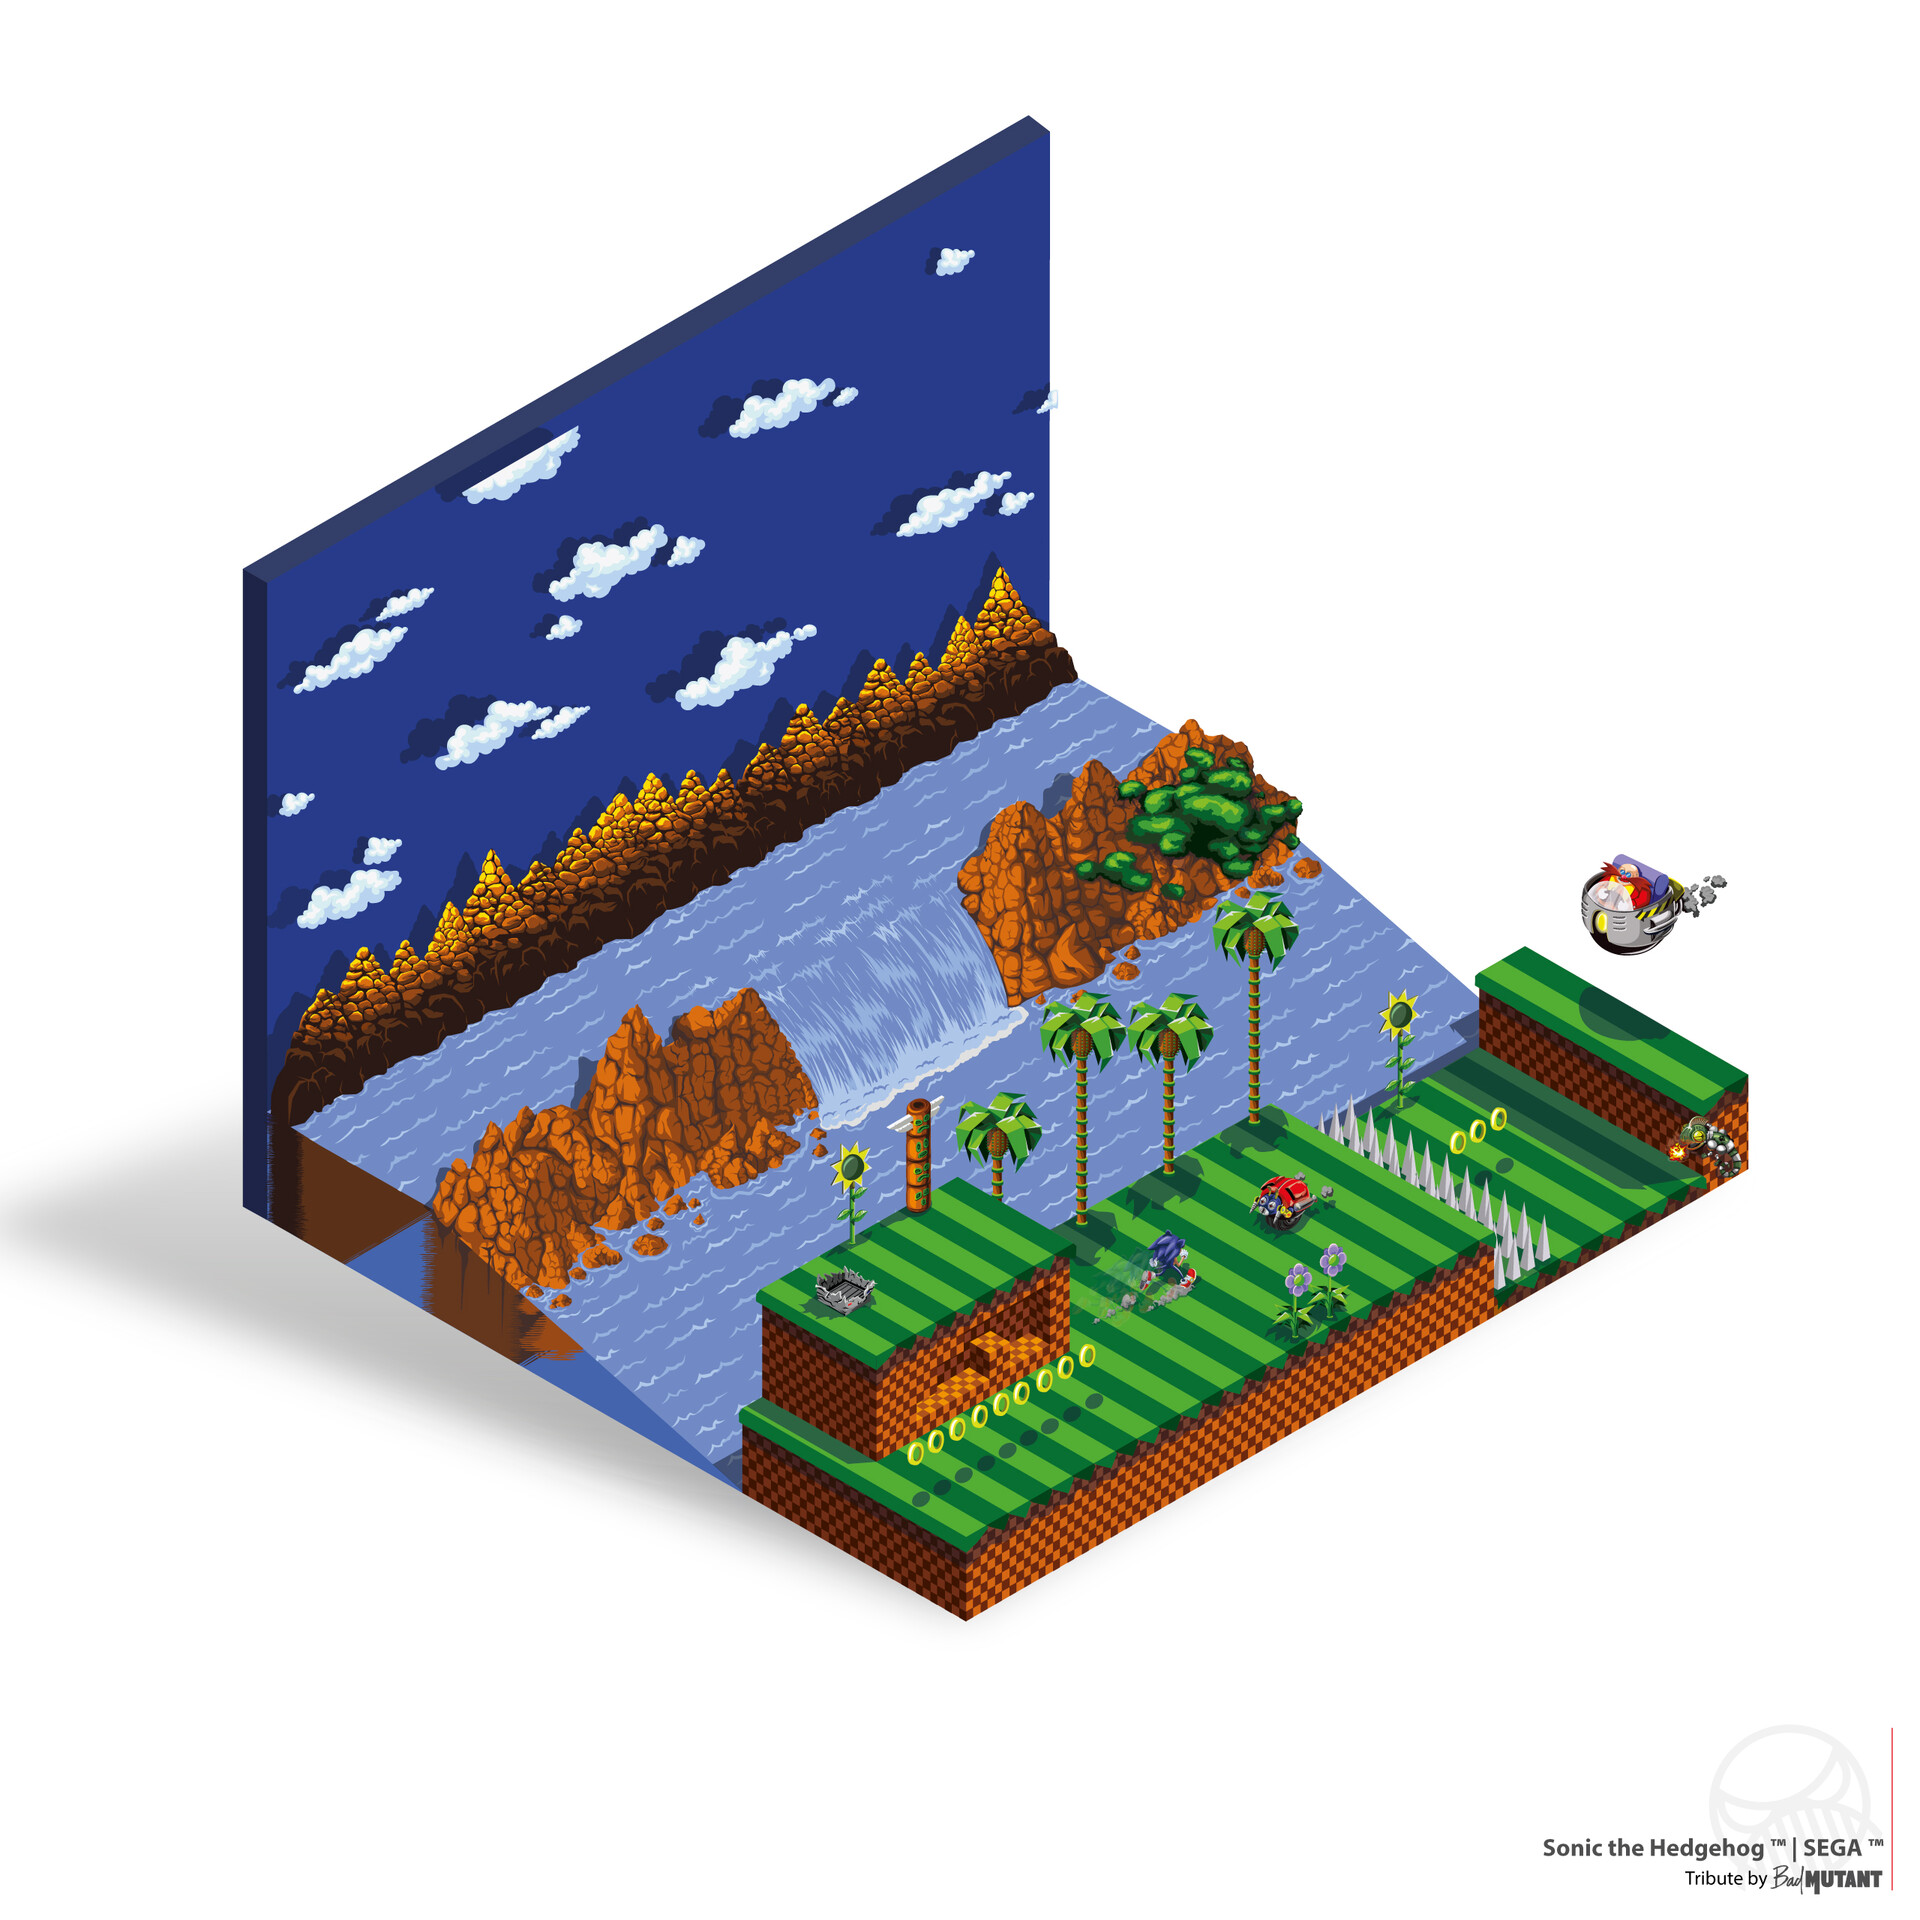 ArtStation - Sonic the Hedgehog Diorama Series: Green Hill Zone